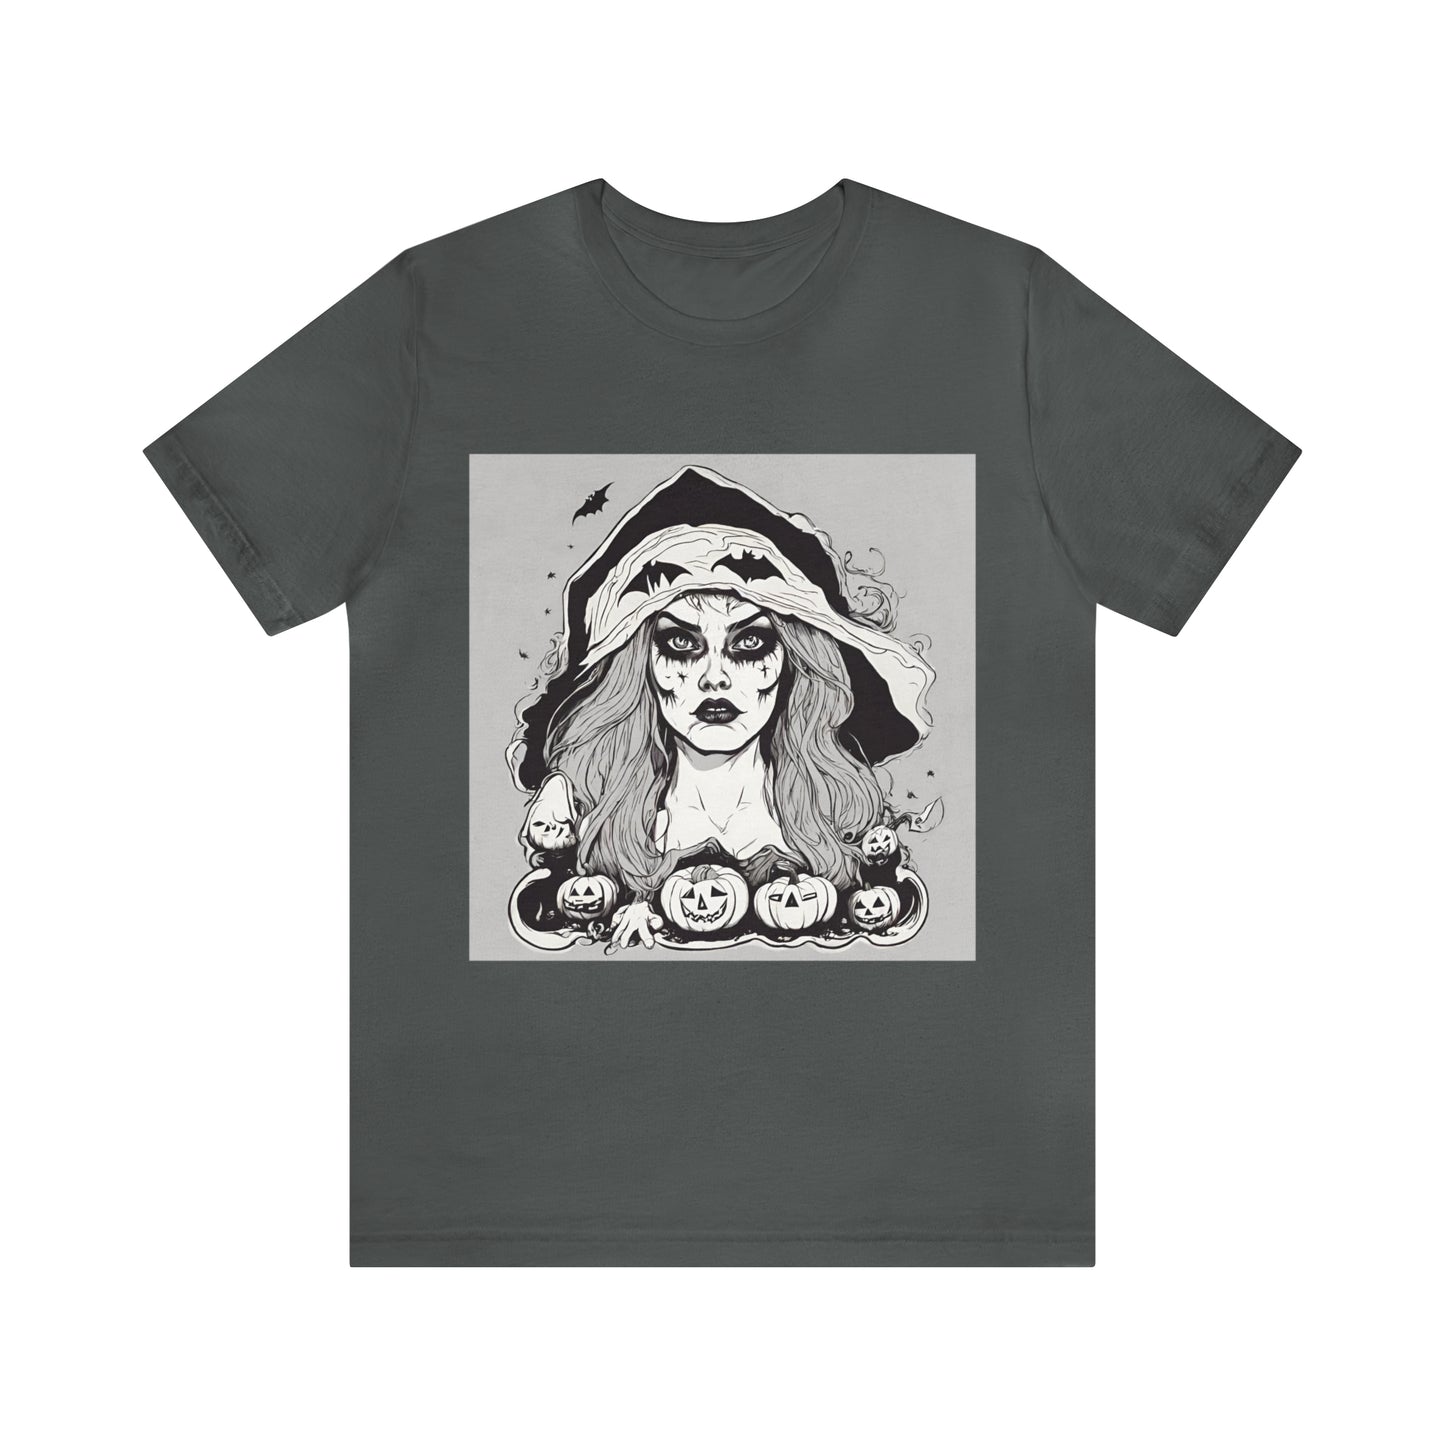 Asphalt T-Shirt Tshirt Design Halloween Gift for Friend and Family Short Sleeved Shirt Petrova Designs